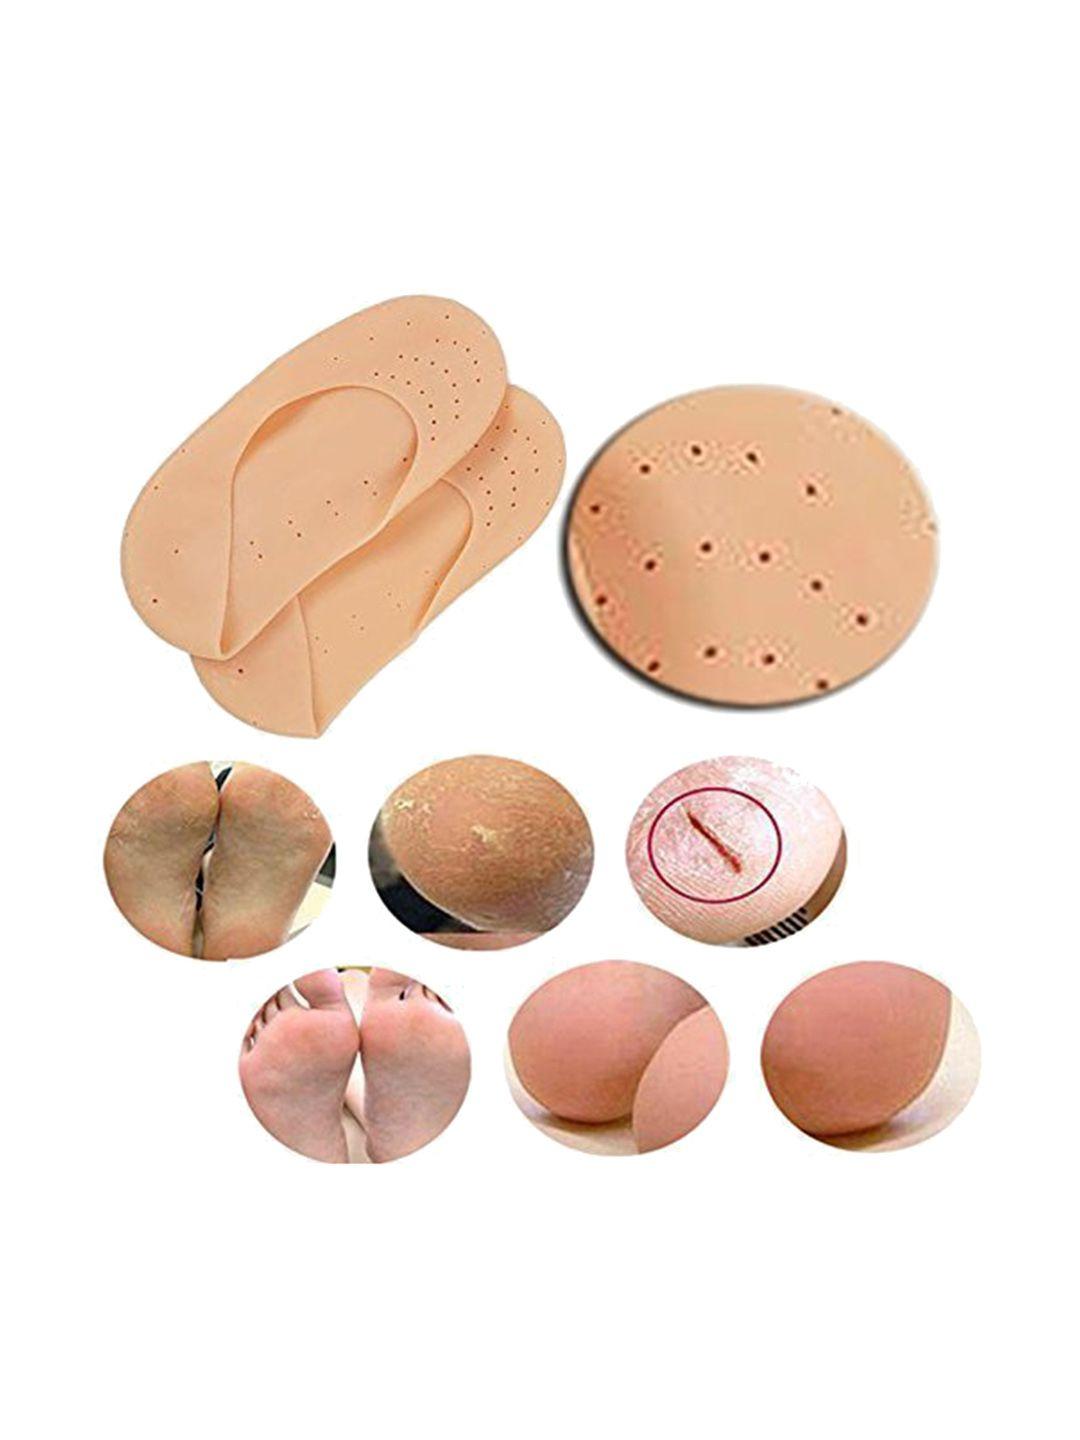 alexvyan full skin silicone foot care heel pad socks for dry hard cracked repair - beige